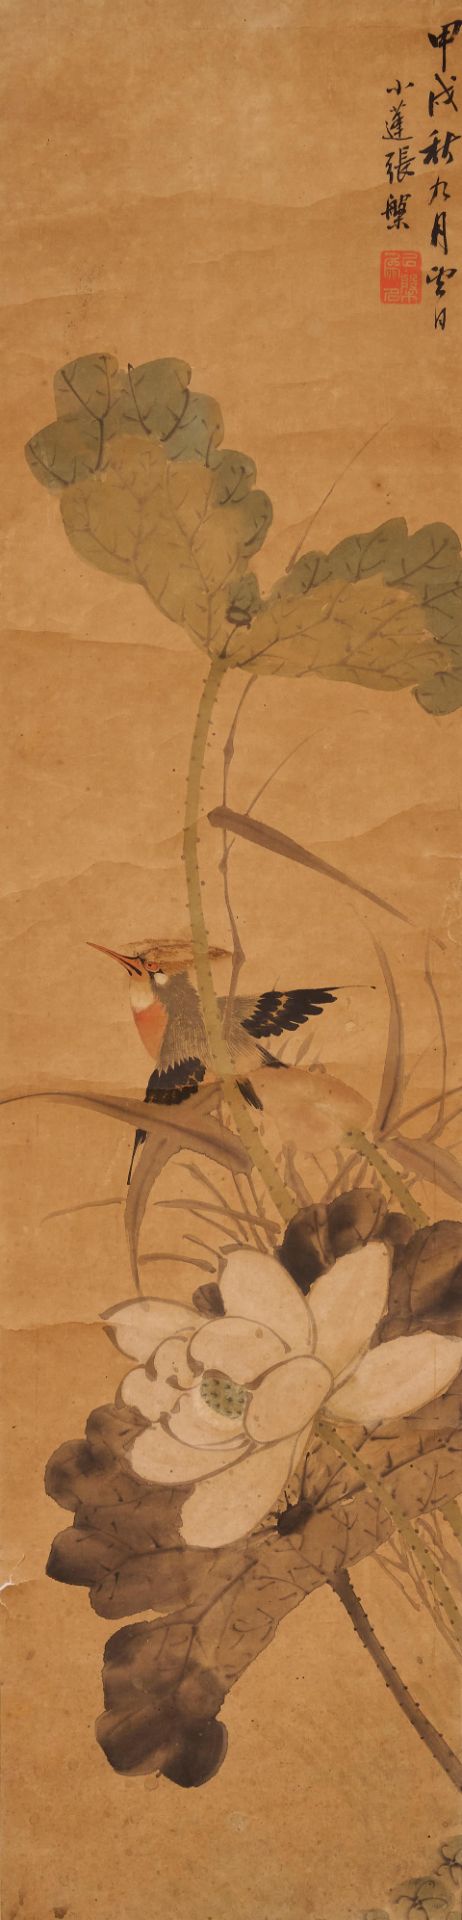 Zhang Pan (1812-?) Bird and Flower